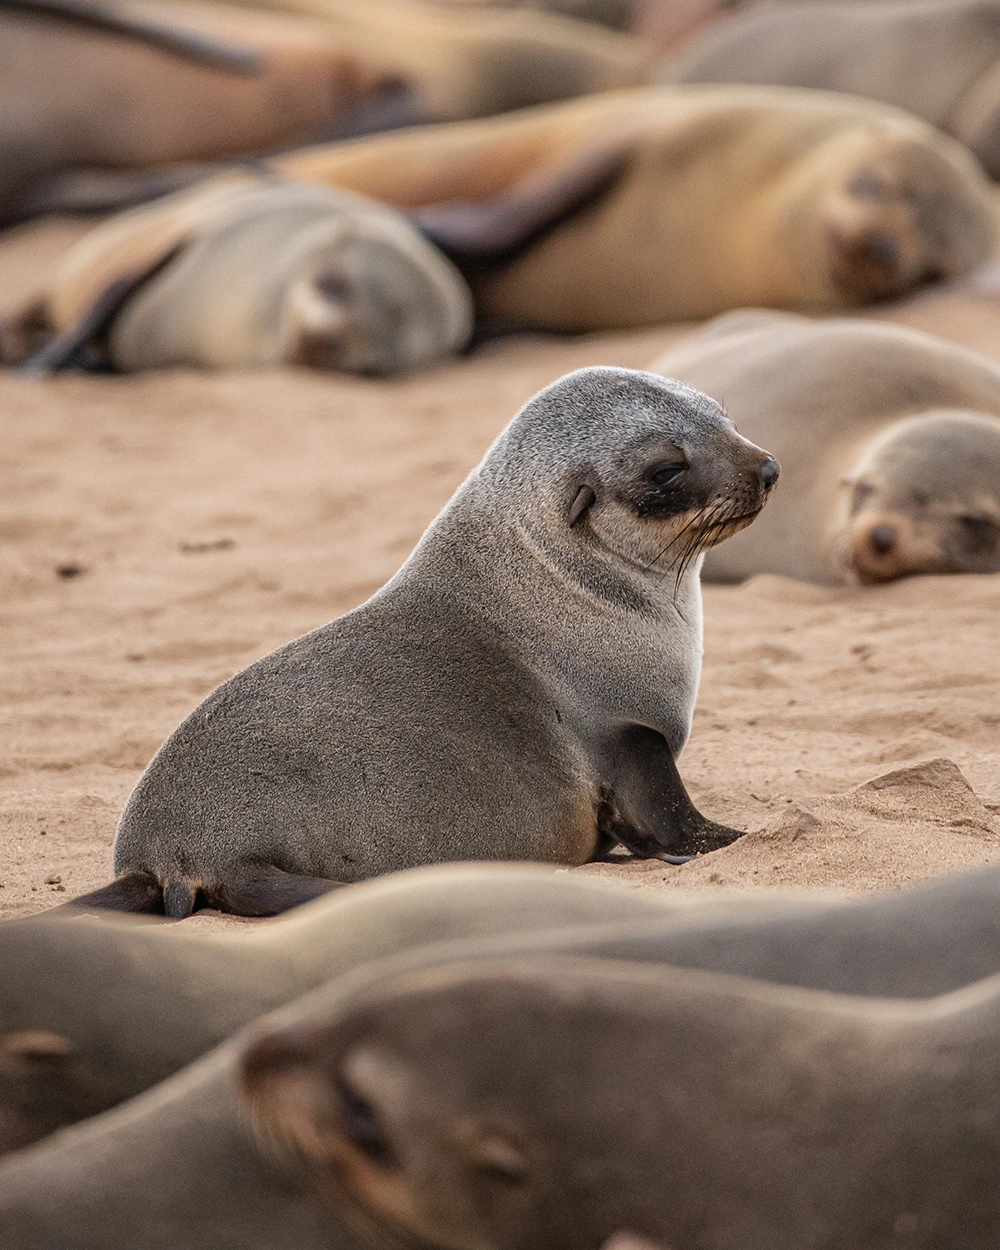 Nambia Sehenswürdigkeiten im Cape Cross Seal Reserve
© Marielle Janotta - My Travel Island